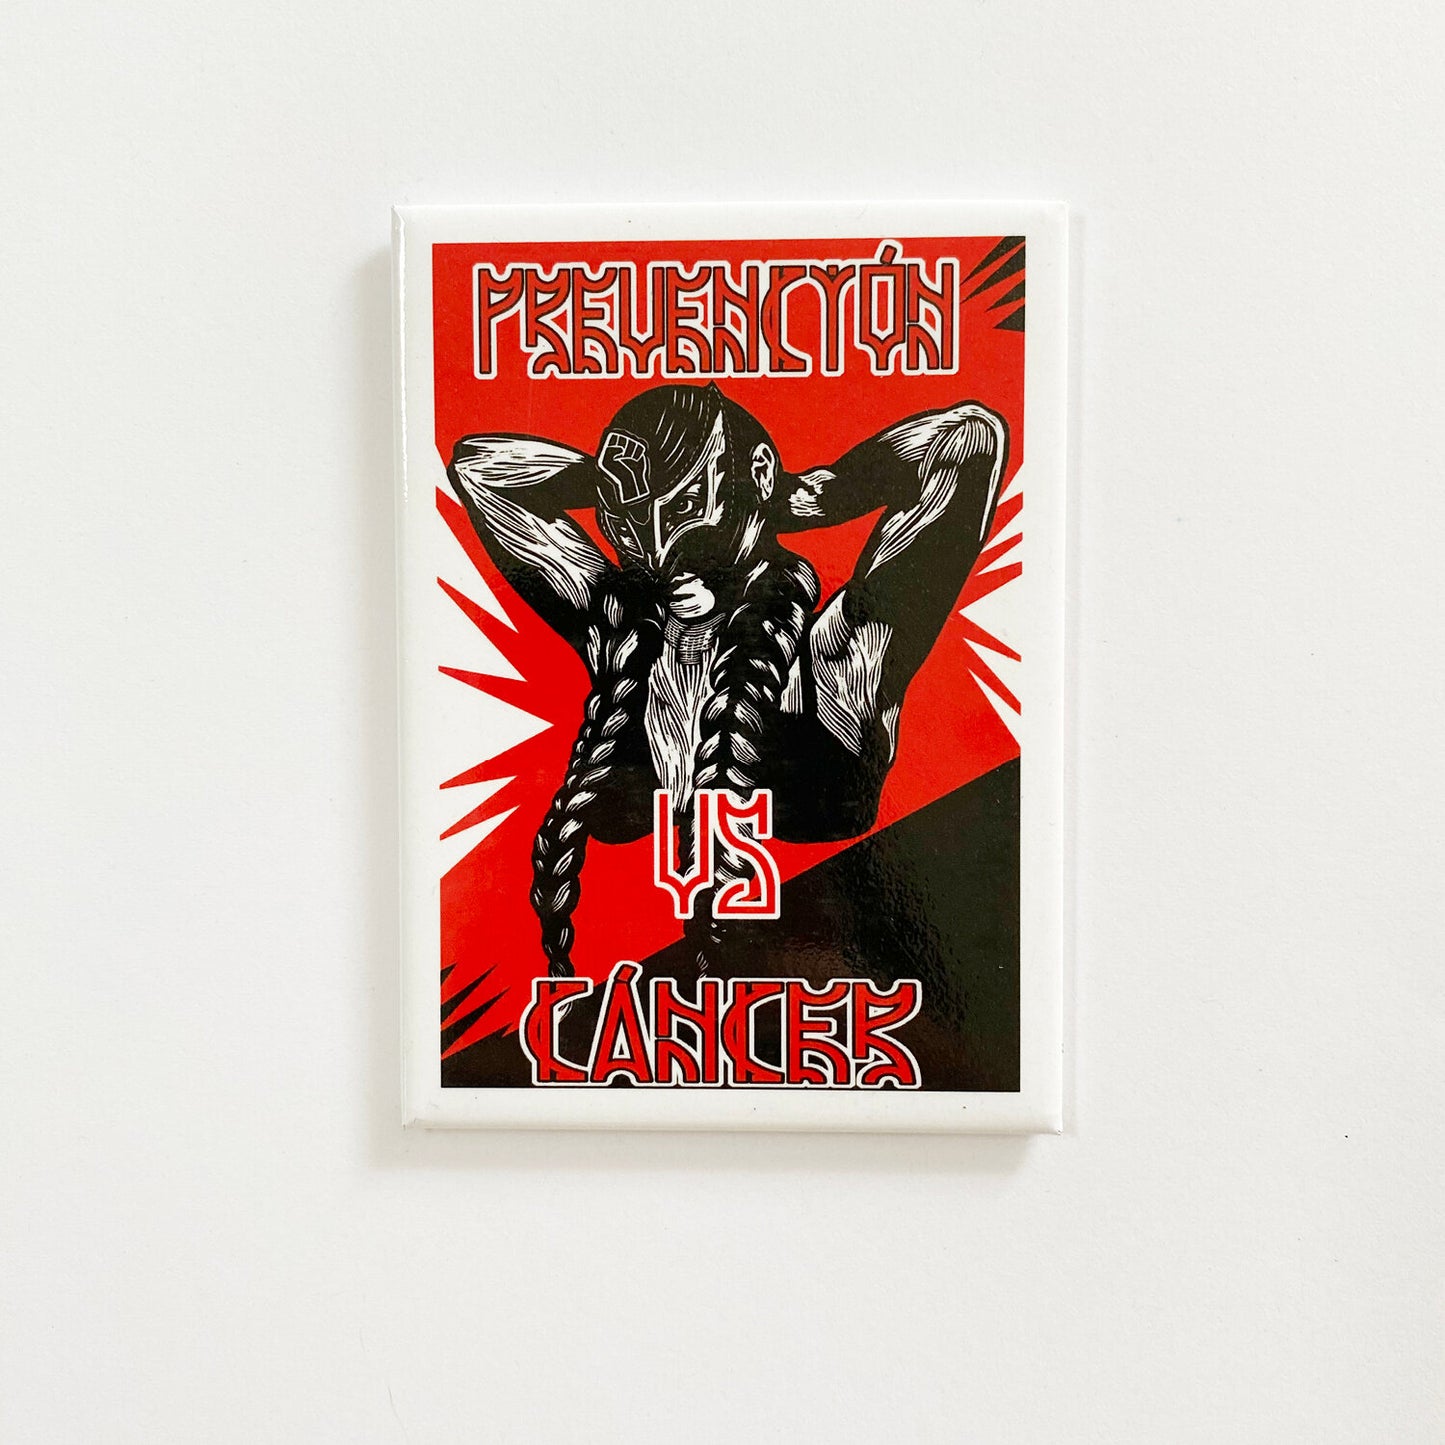 Magnet: "Preventión VS Cancer" by Vlocke Negro